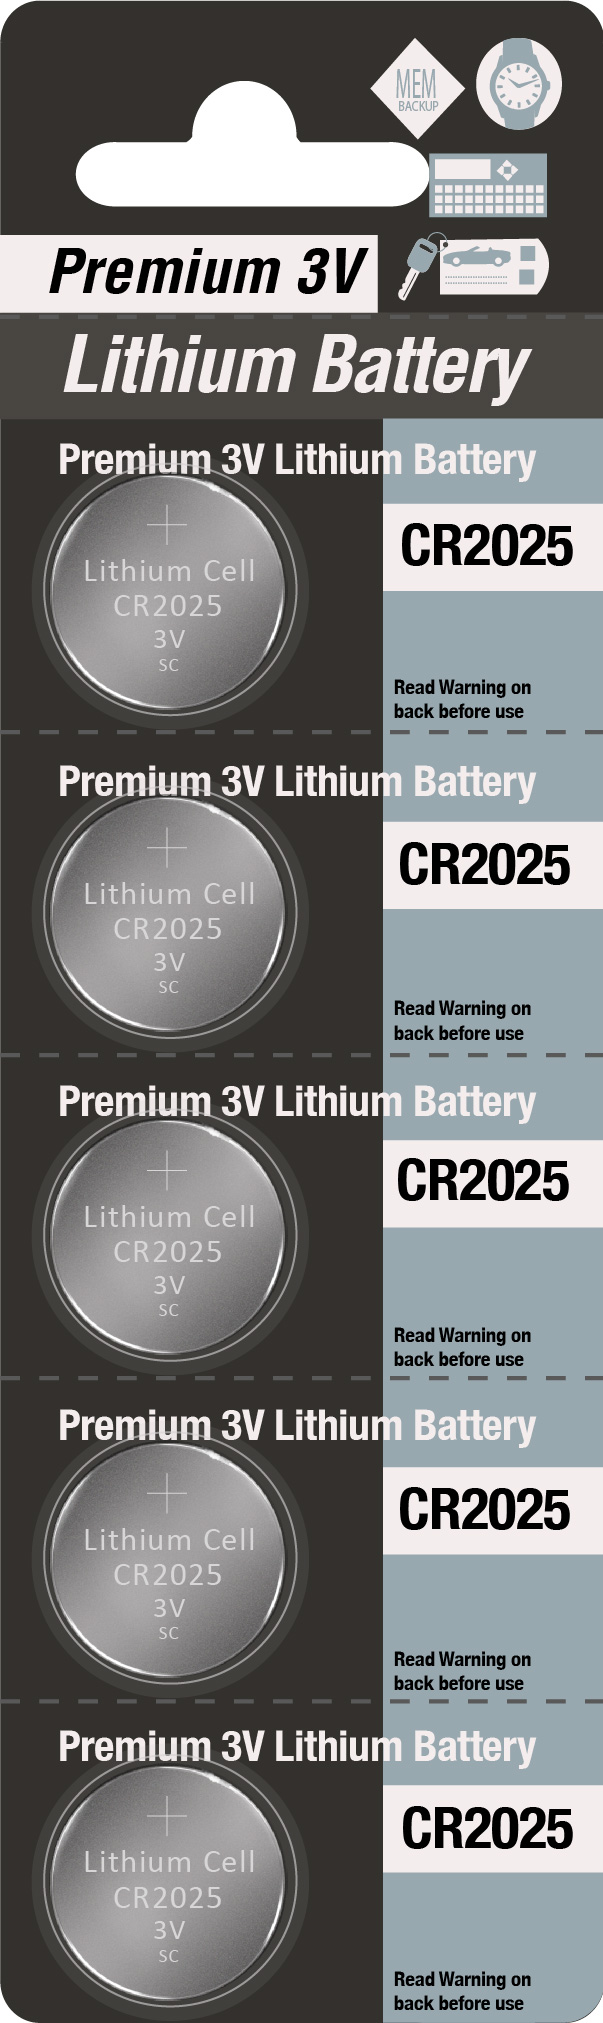 cr2025 lithium battery